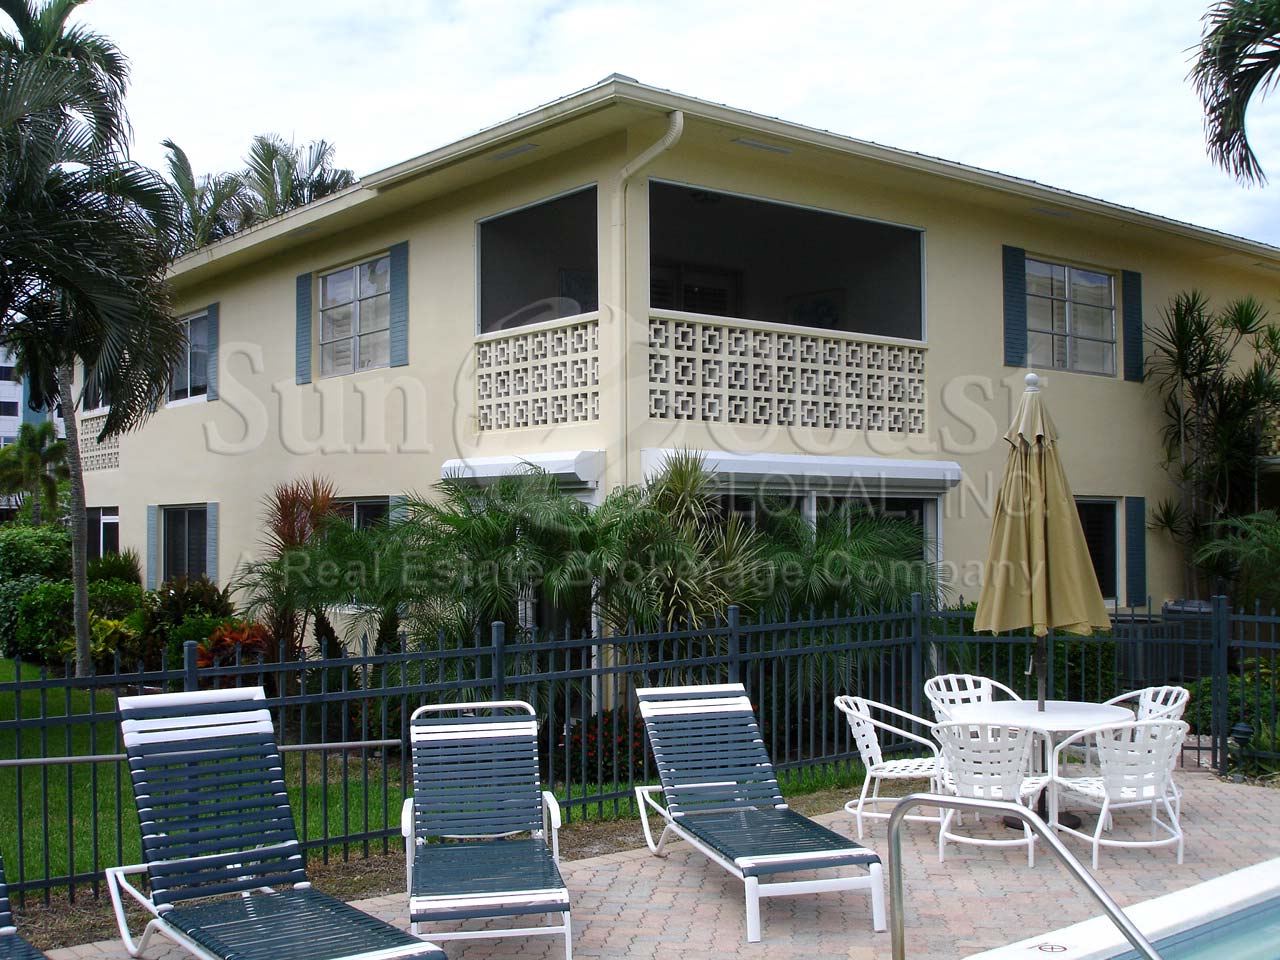 Palm Bay Villas Community Pool and Sun Deck Furnishings